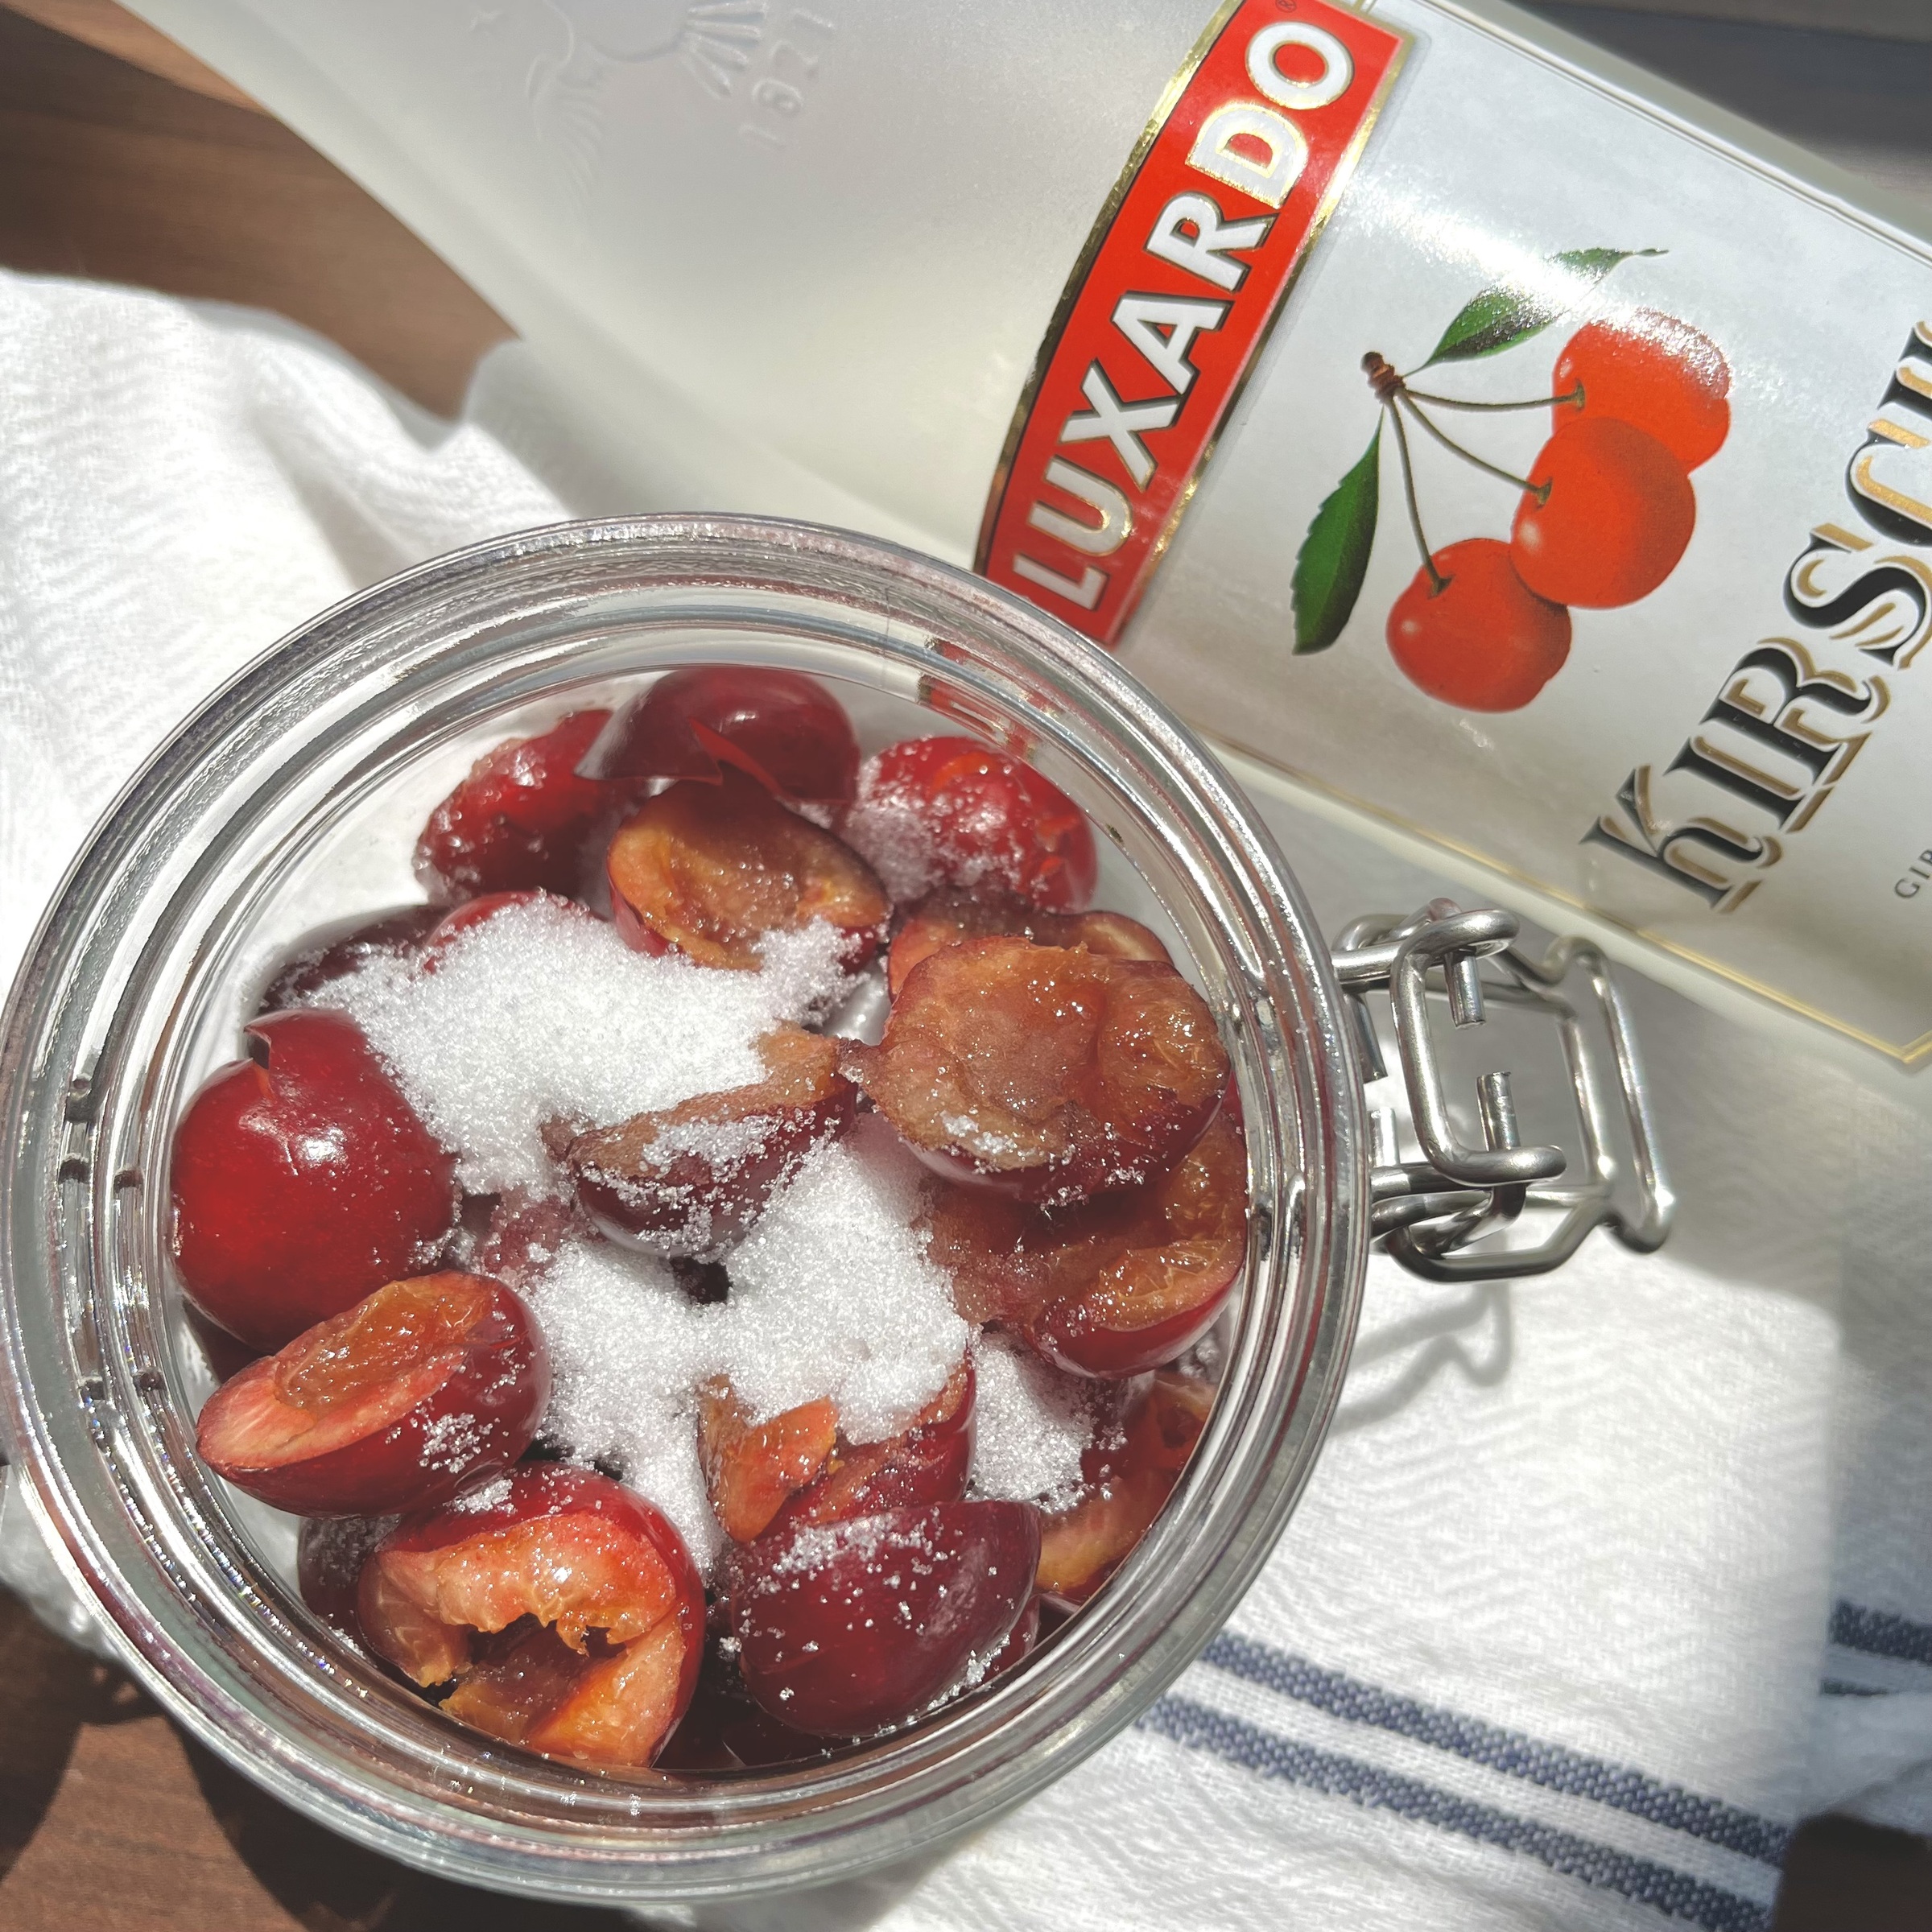 In-house made Kirschwasser infused cherries